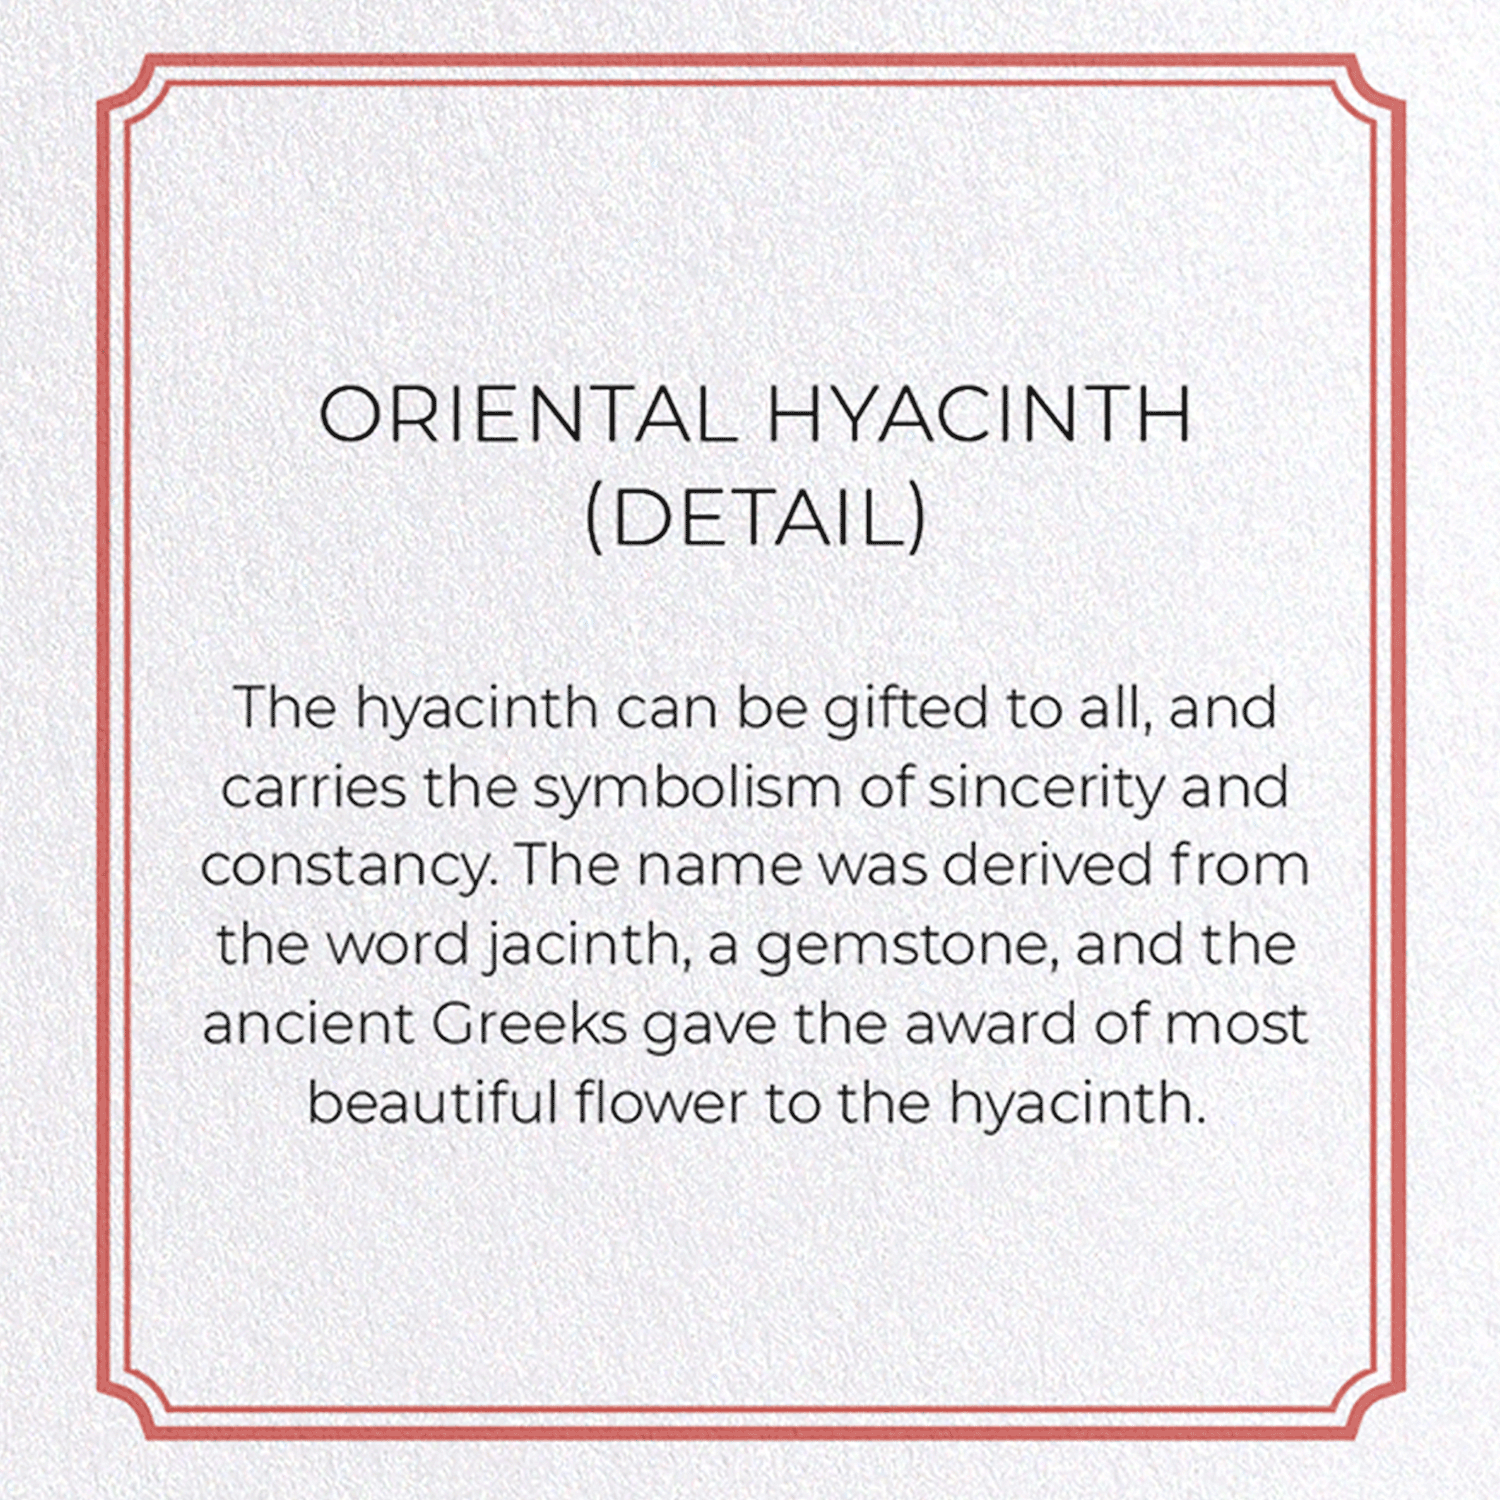 ORIENTAL HYACINTH